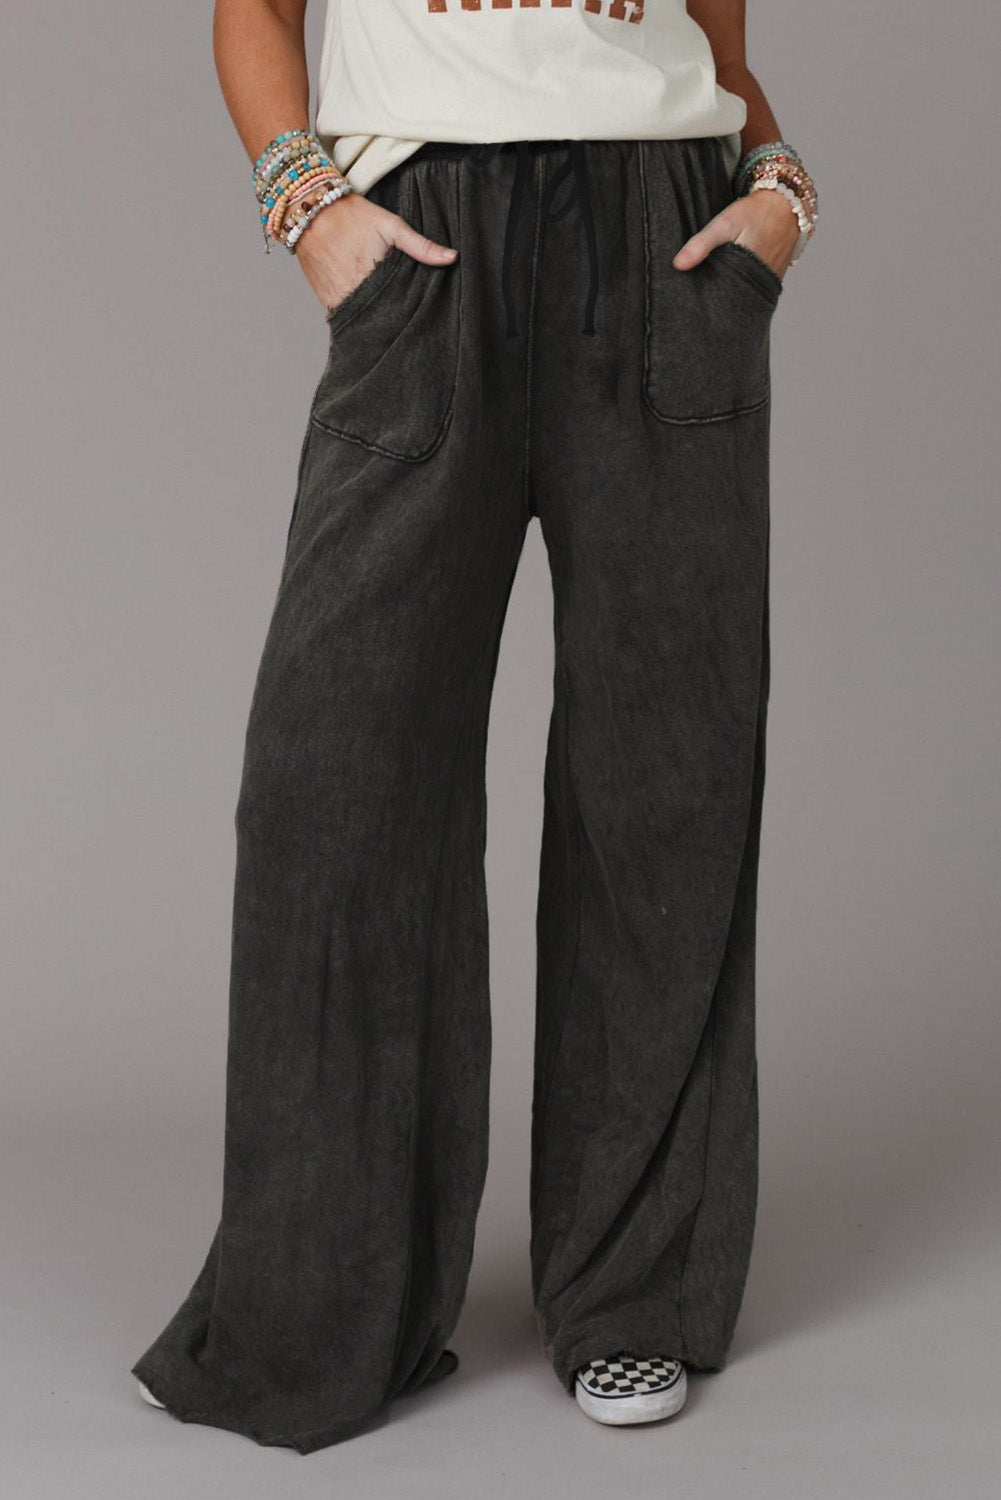 Wide Leg Pocketed Pants - Black / S - Bottoms - Pants - 1 - 2024